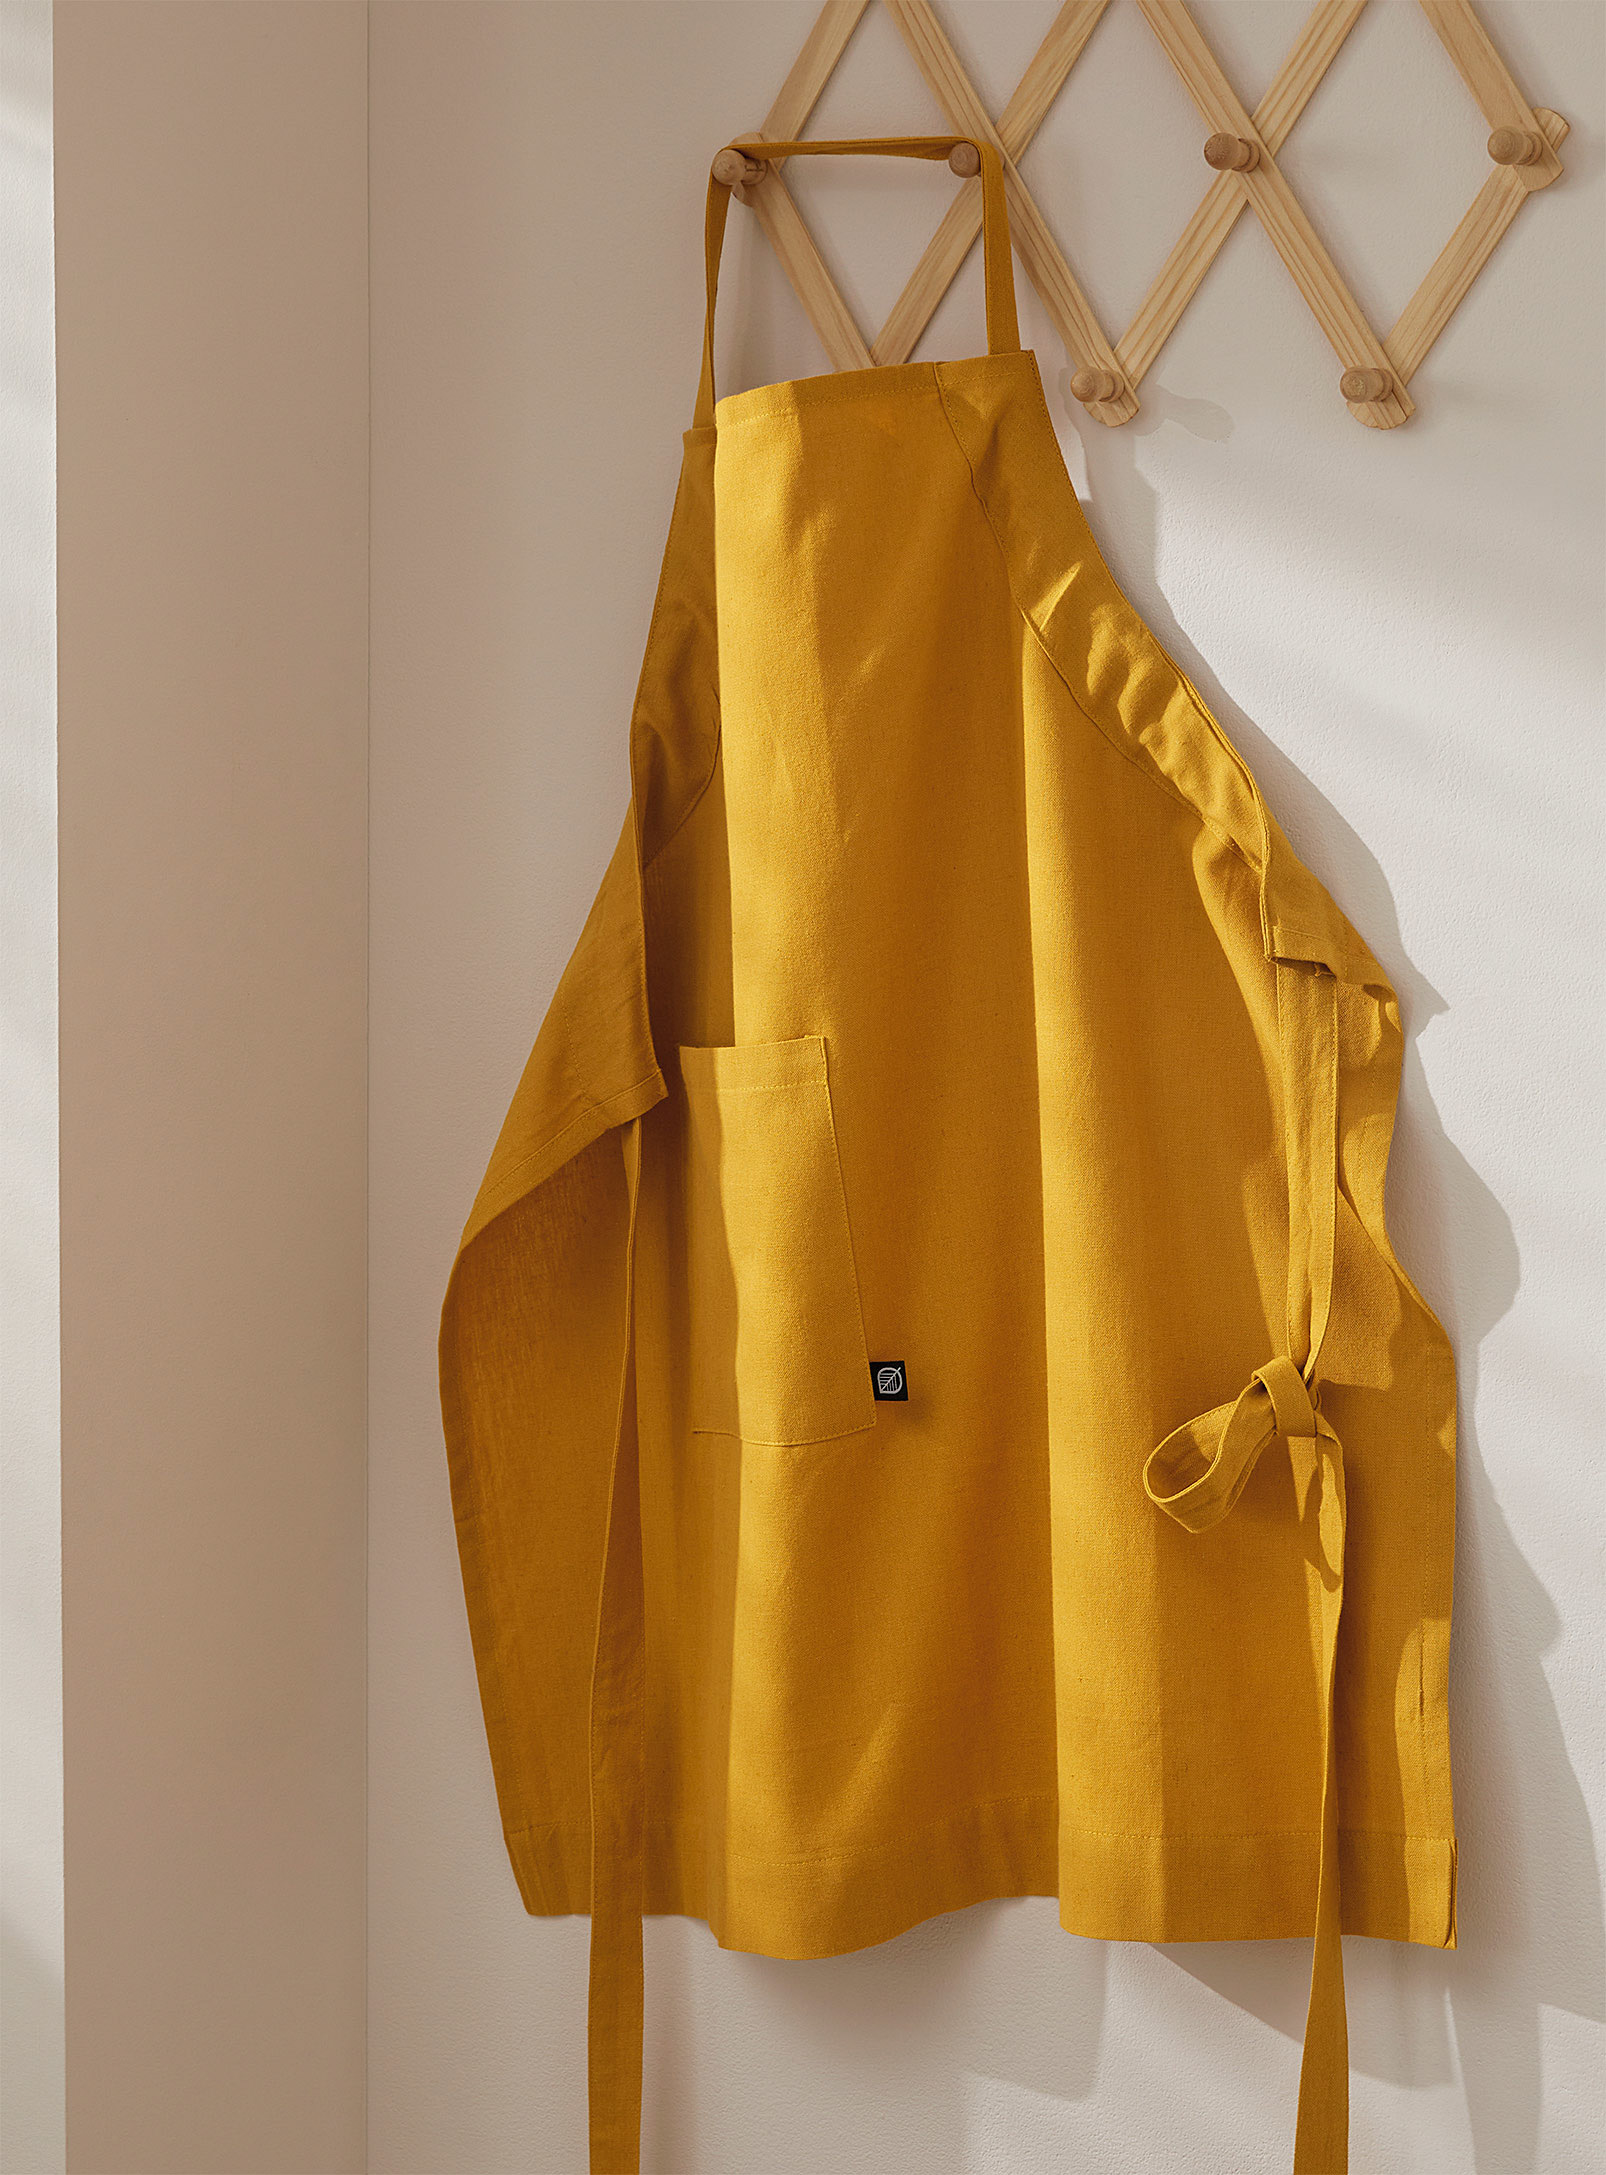 Simons Maison Monochrome Linen And Cotton Apron In Yellow